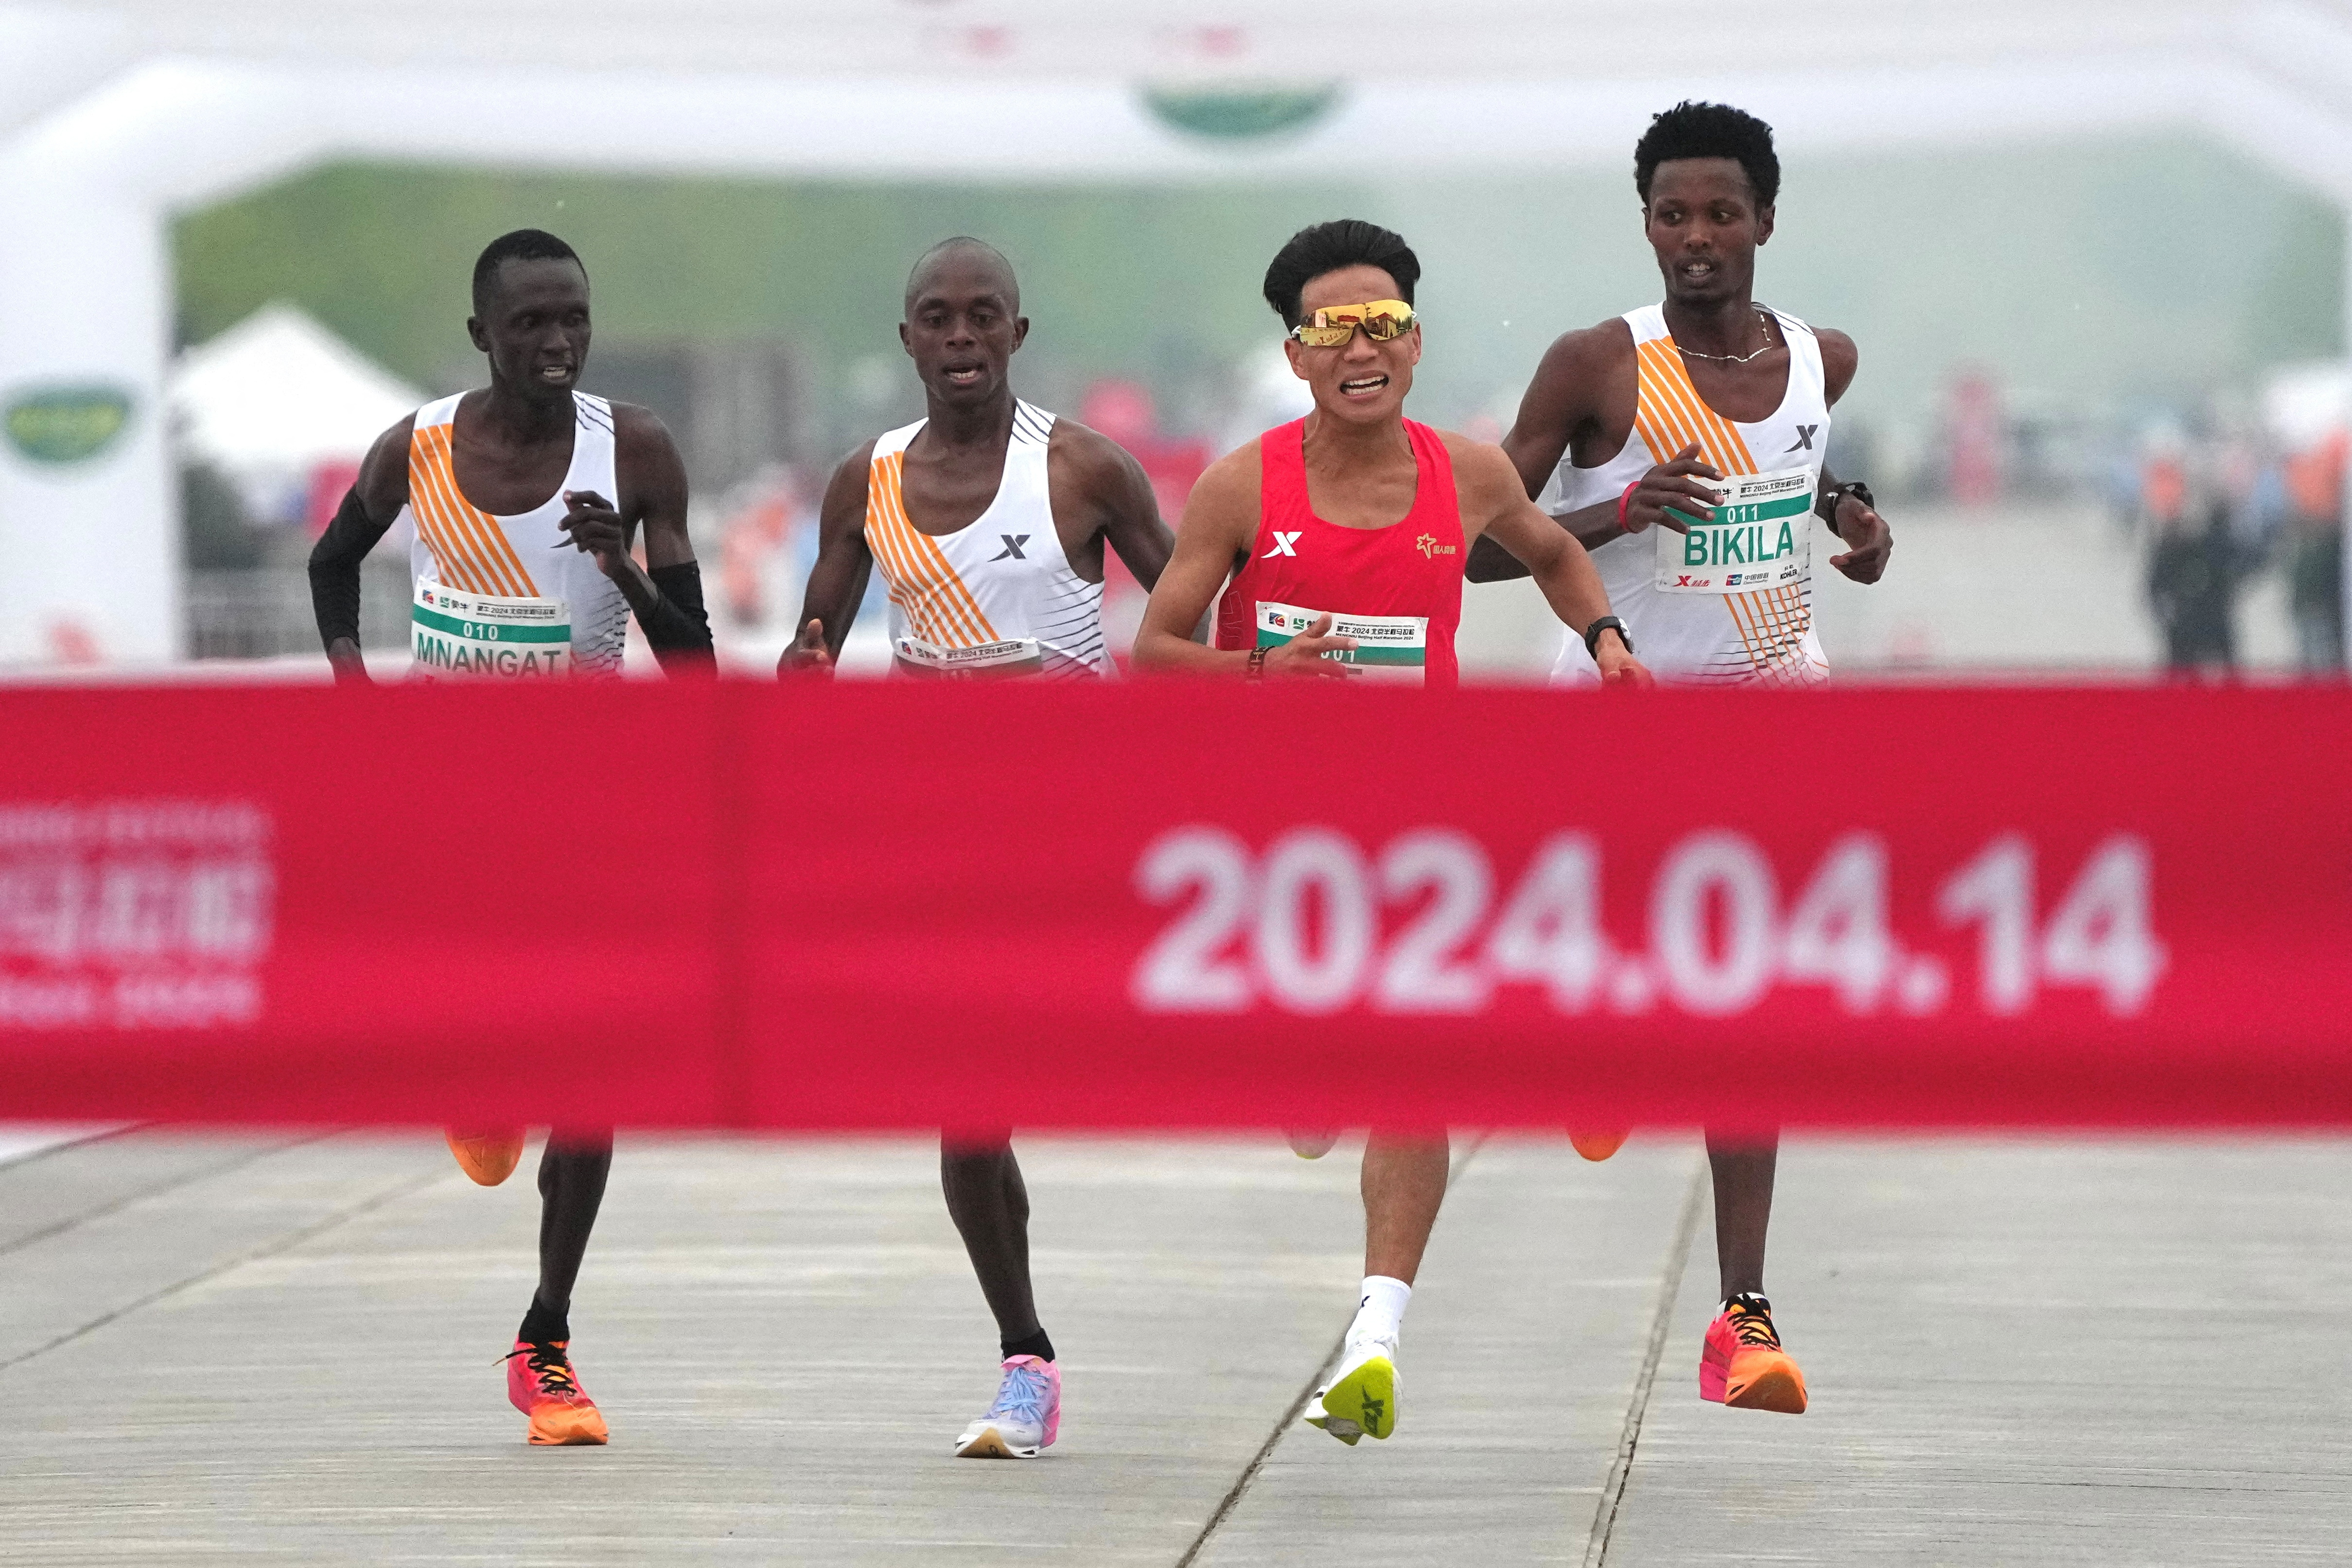 Online videos show Chinese runner being gifted win in Beijing half marathon